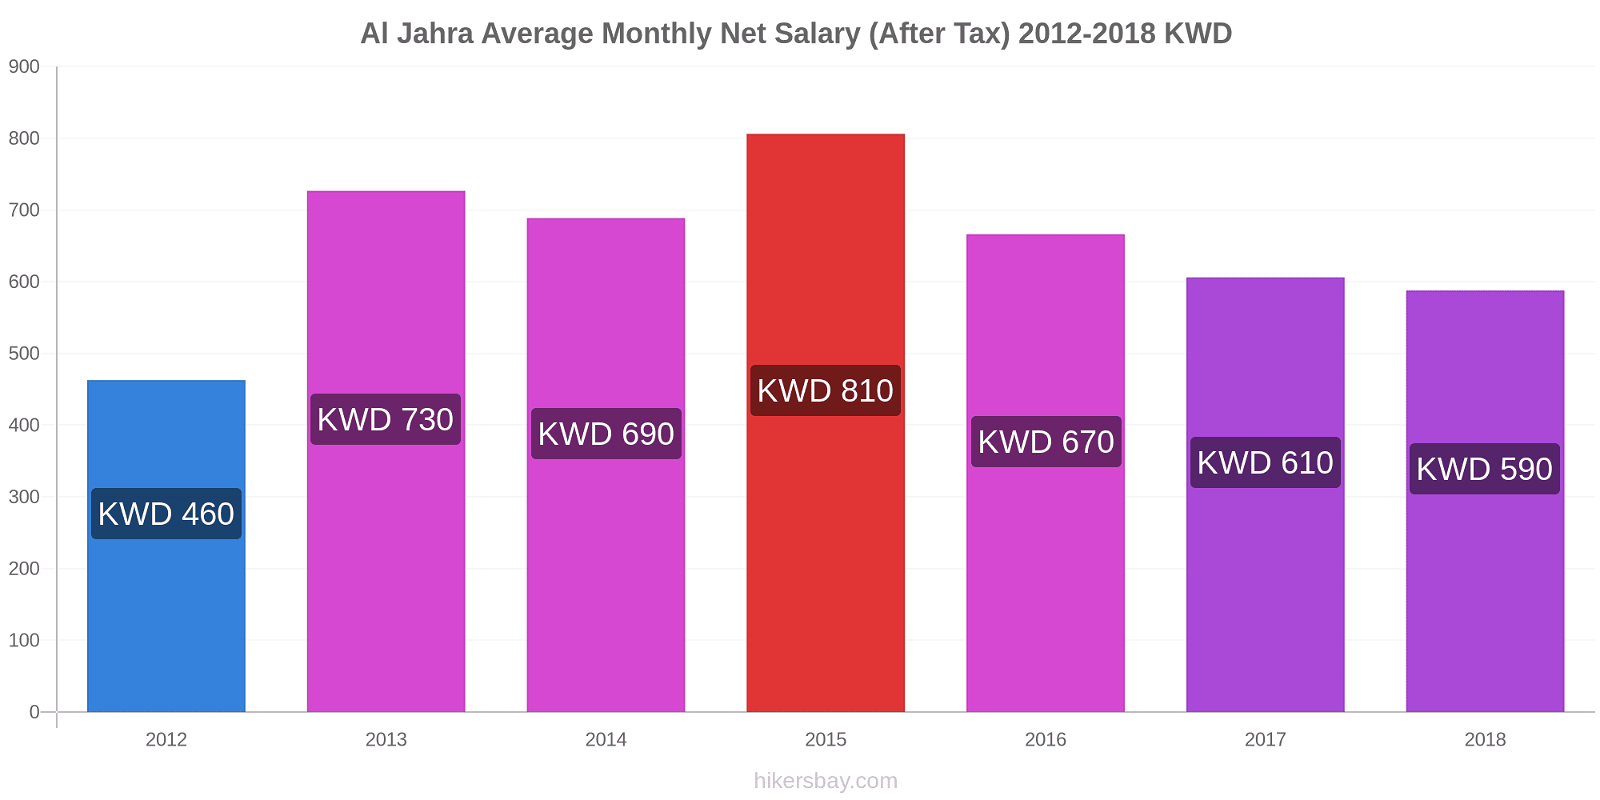 Al Jahra price changes Average Monthly Net Salary (After Tax) hikersbay.com